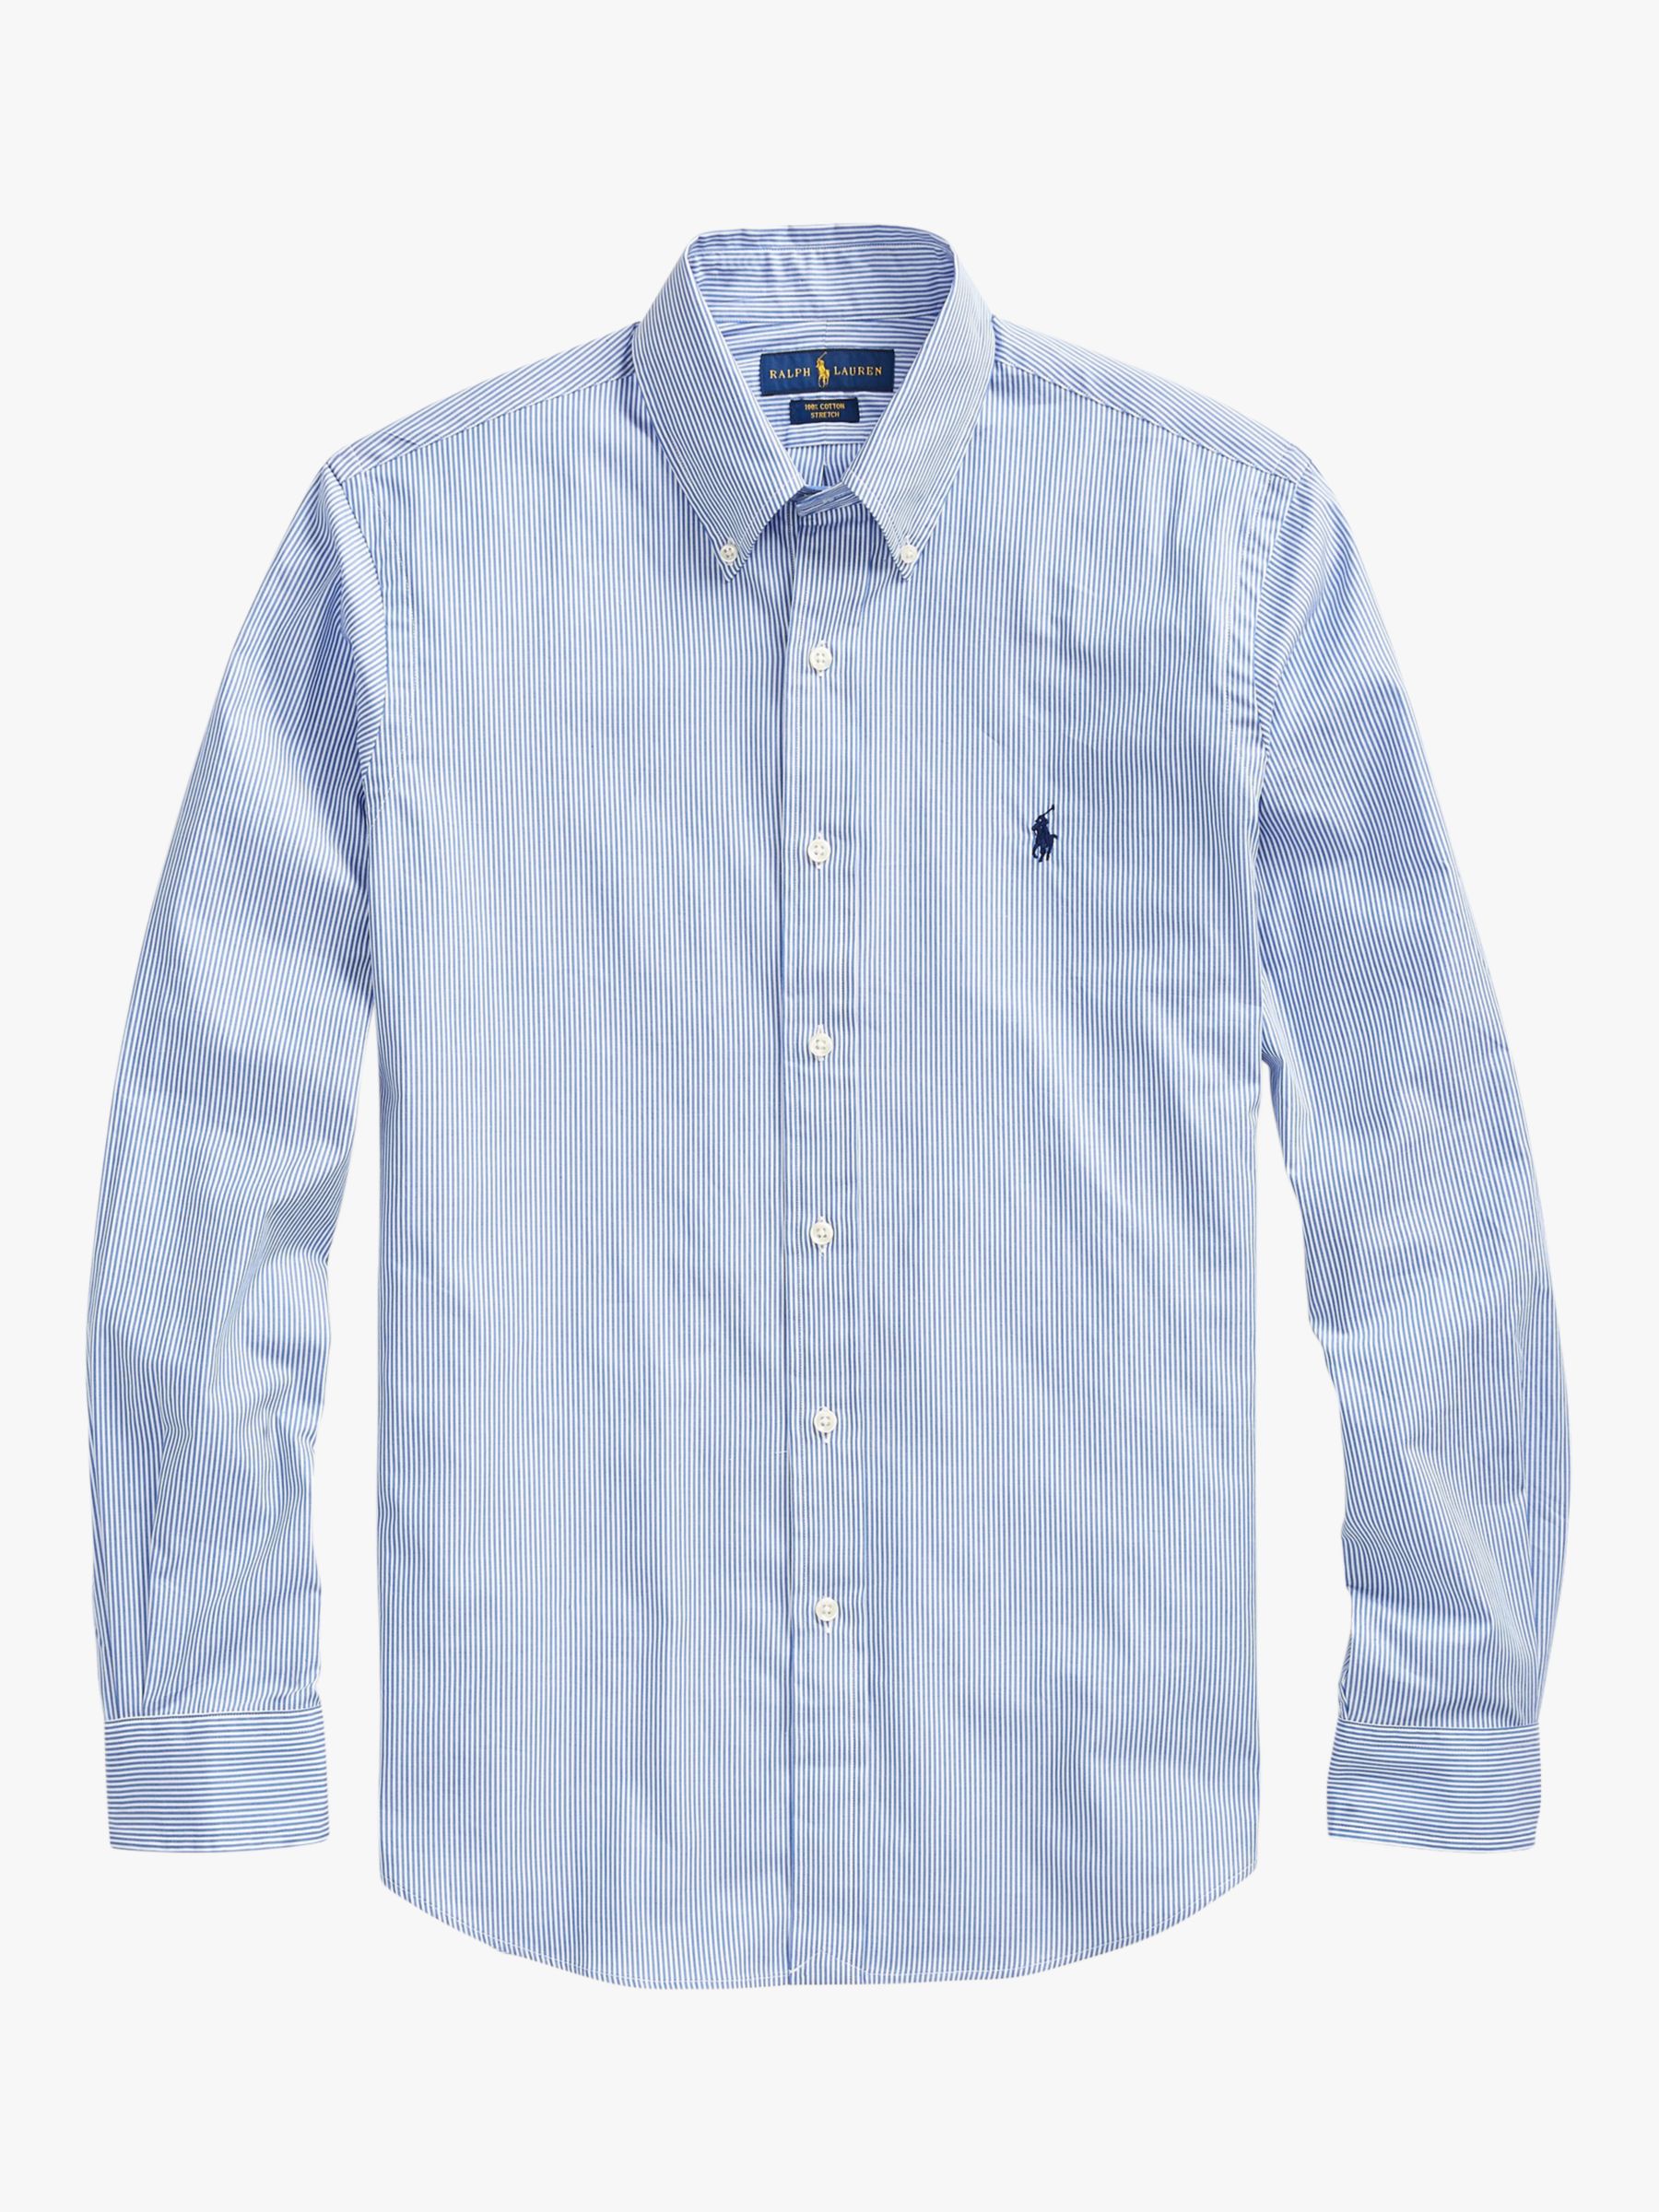 Polo Ralph Lauren Slim Fit Stripe Shirt, Blue/White